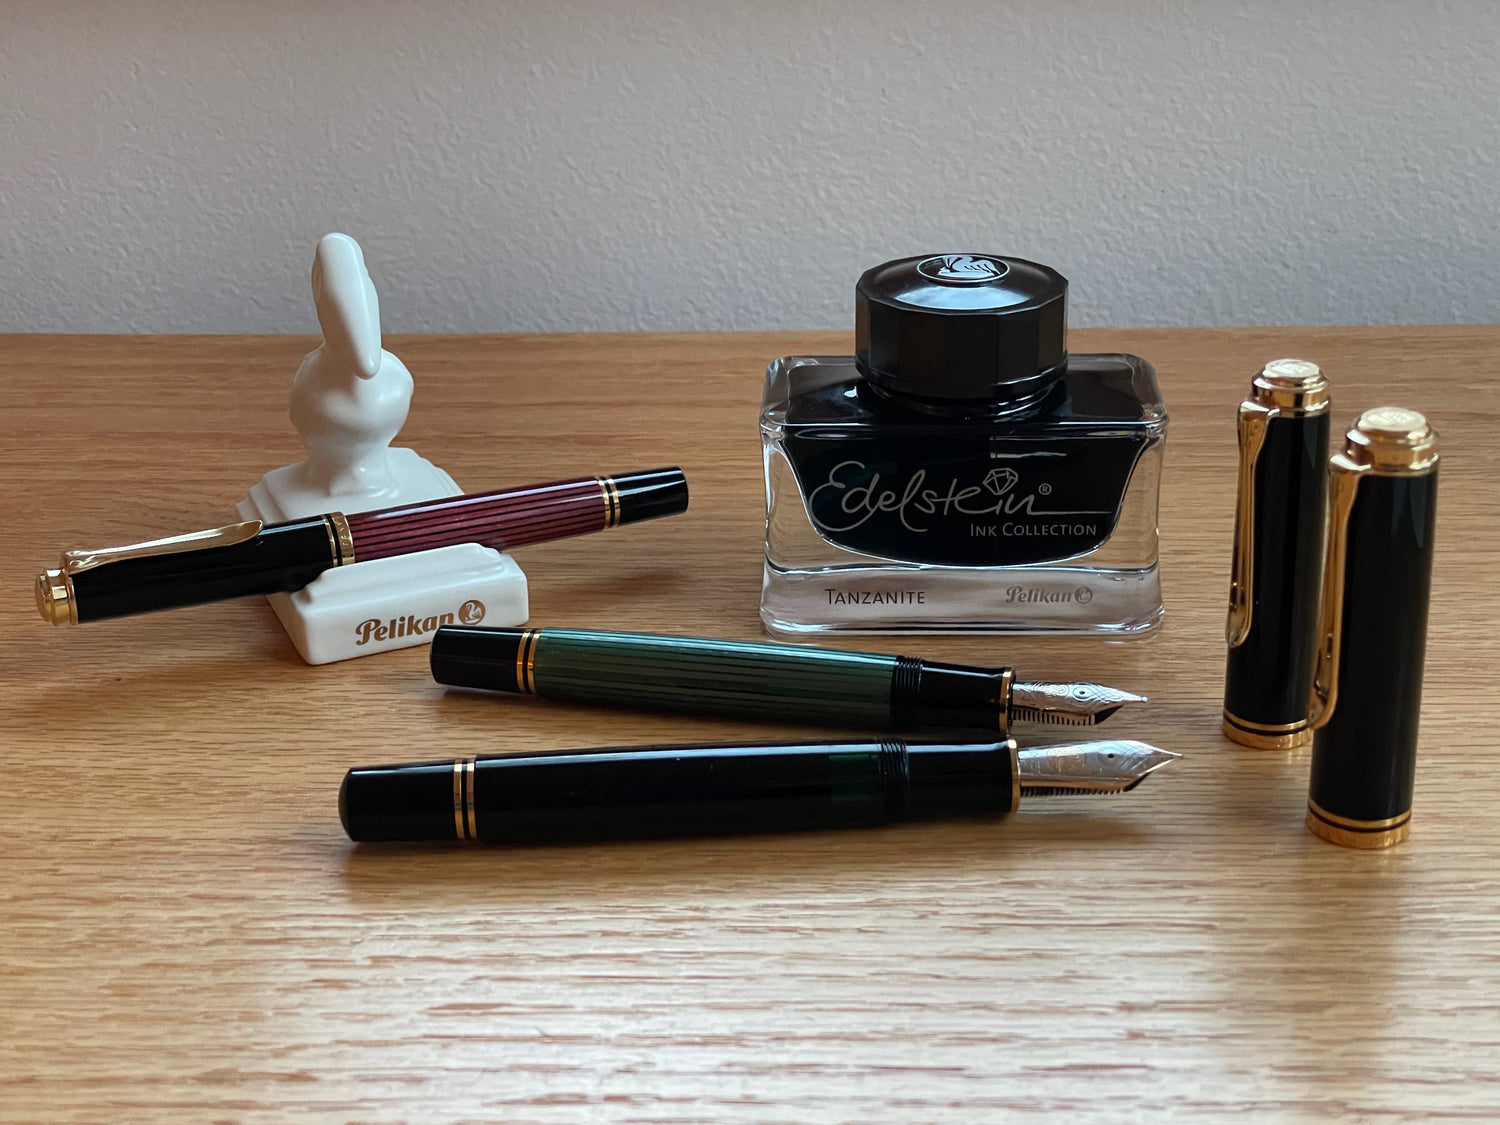 Pelikan Golden Beryl Ink of the Year Fountain Pen Ink Unboxing 